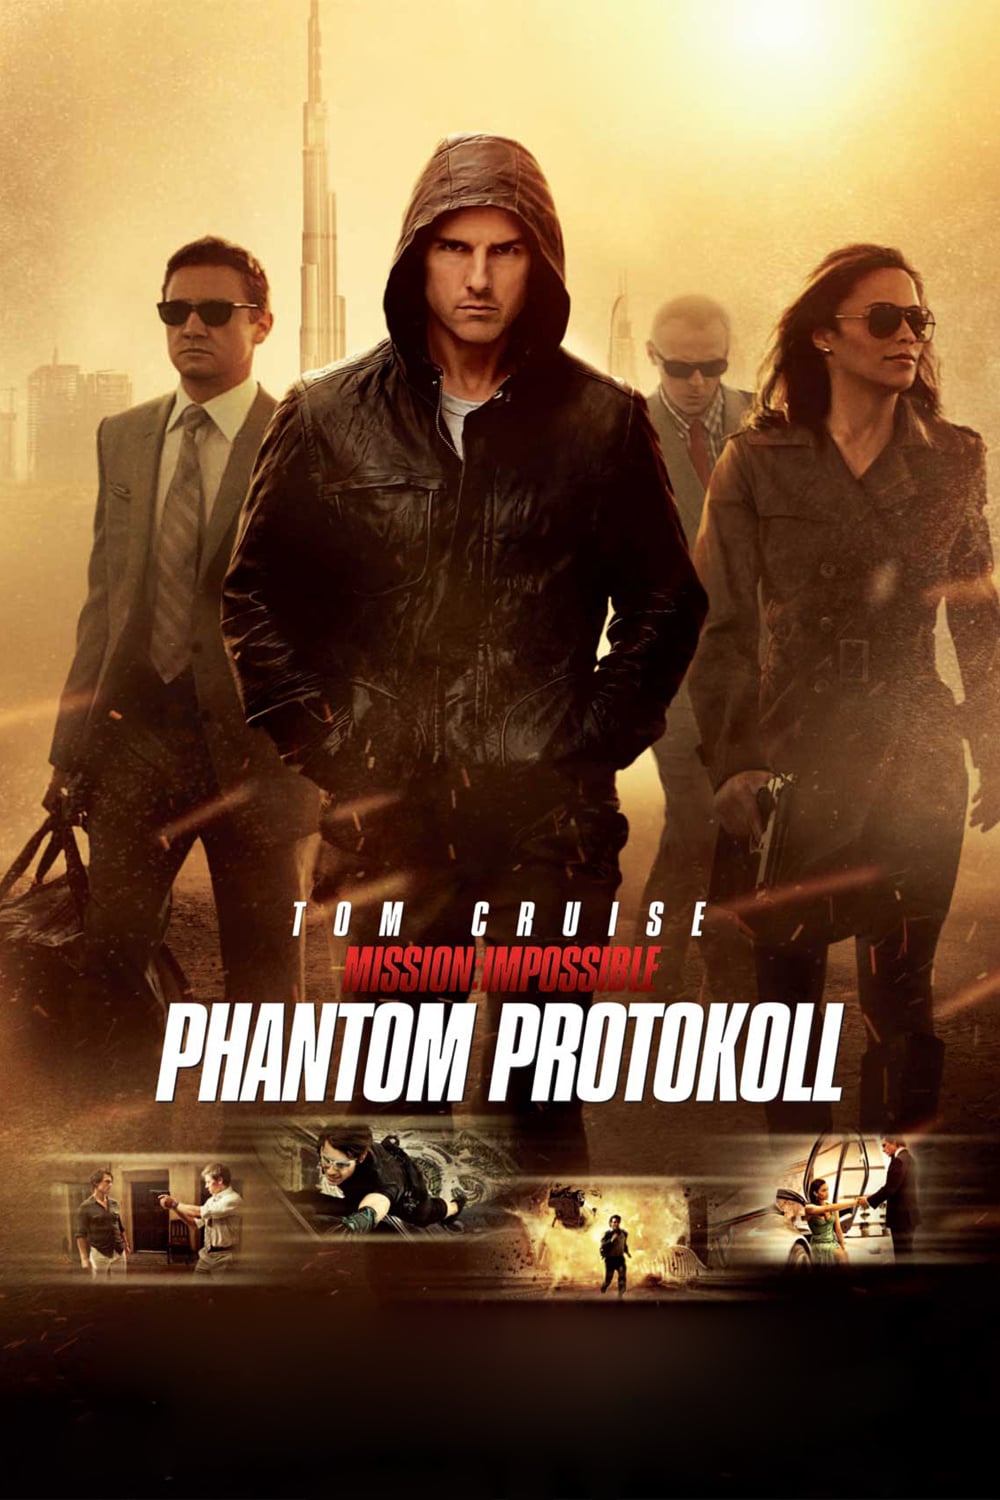 Plakat von "Mission: Impossible - Phantom Protokoll"